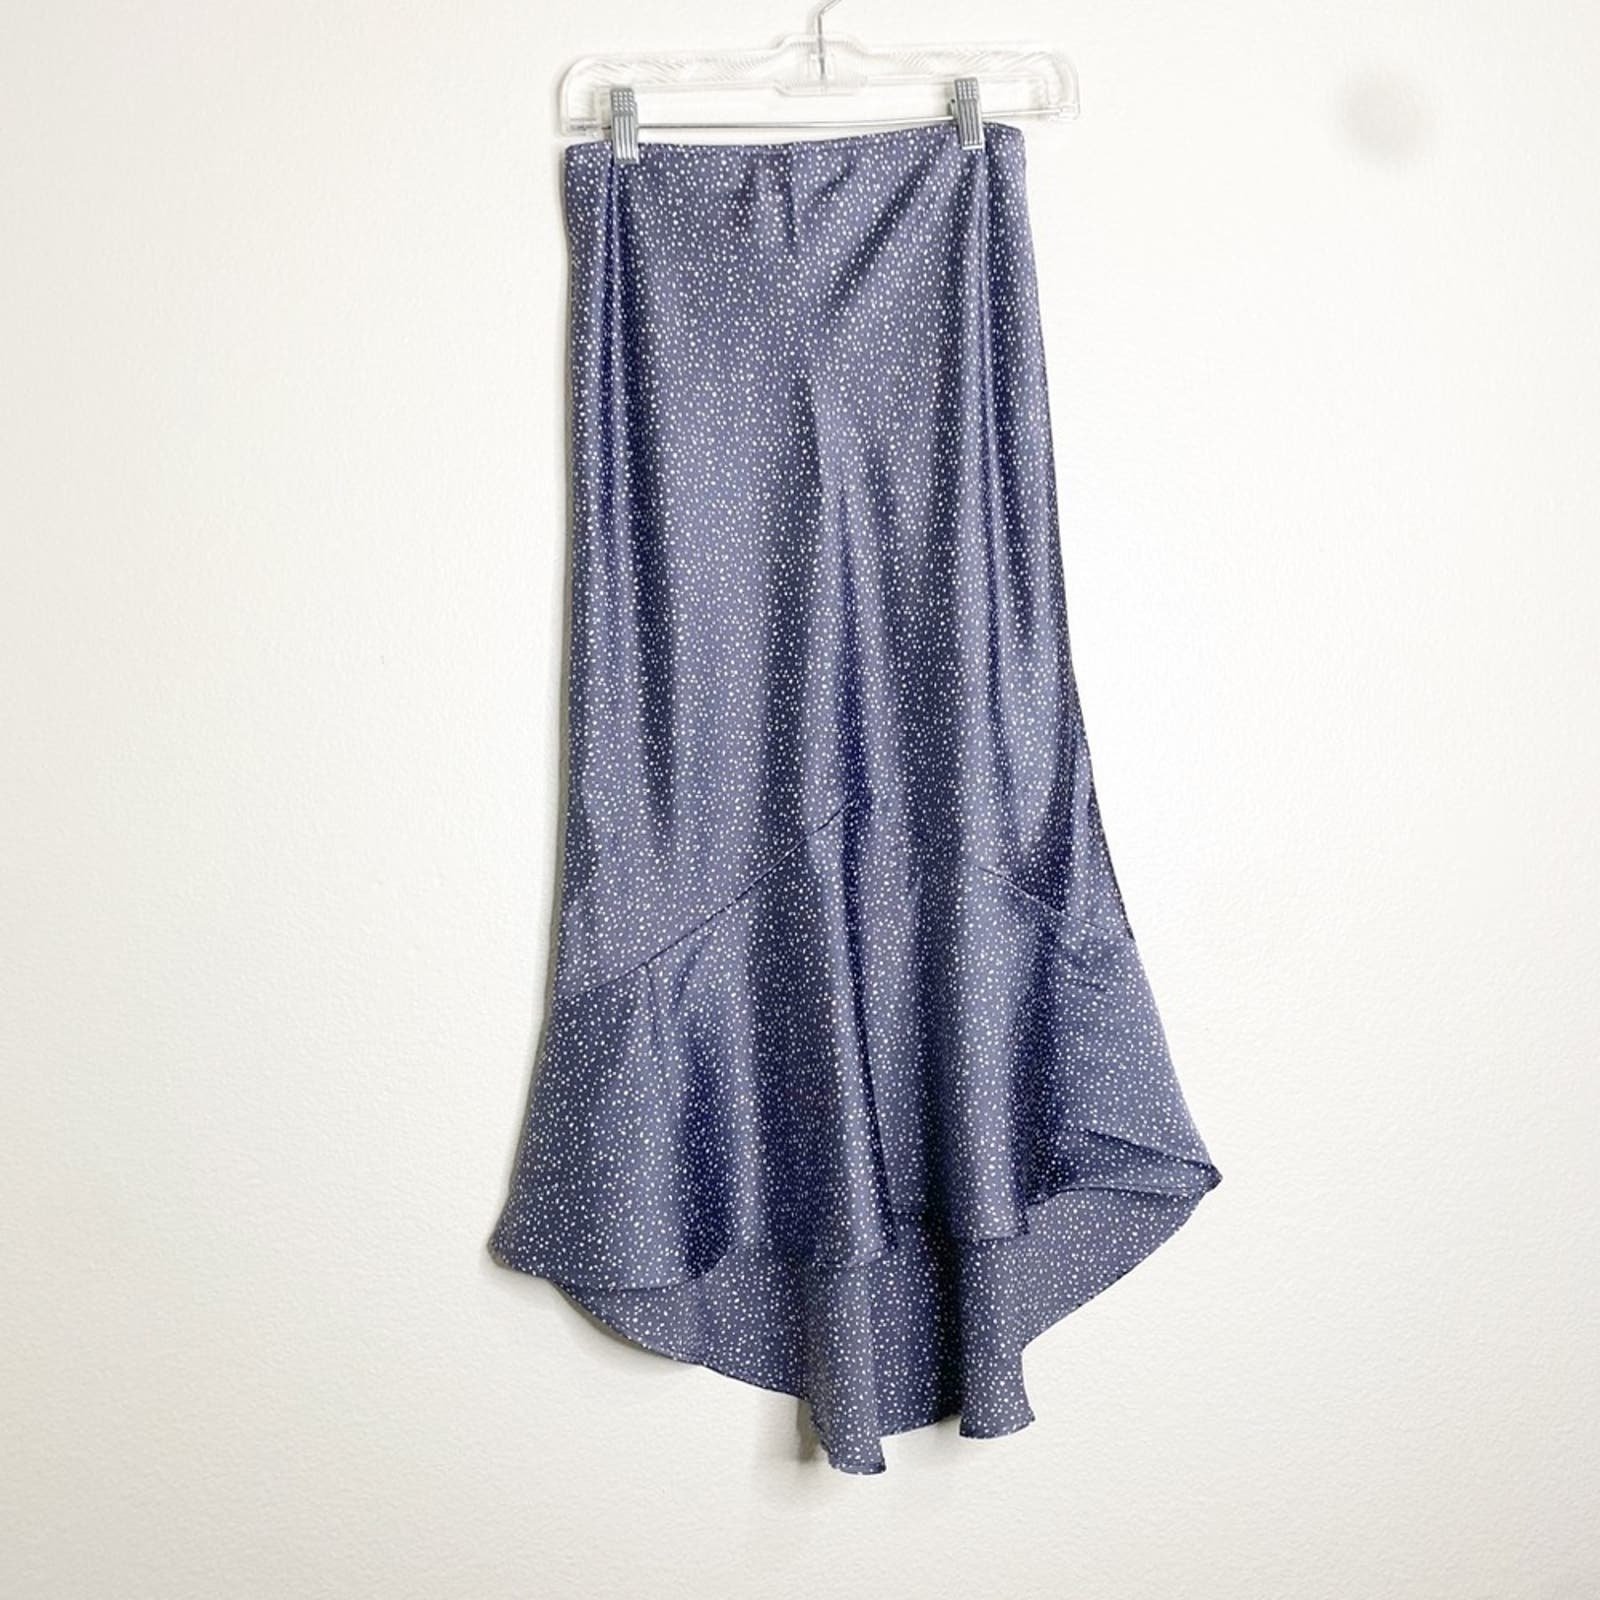 Popular Abercrombie & Fitch blue speckled midi dress si